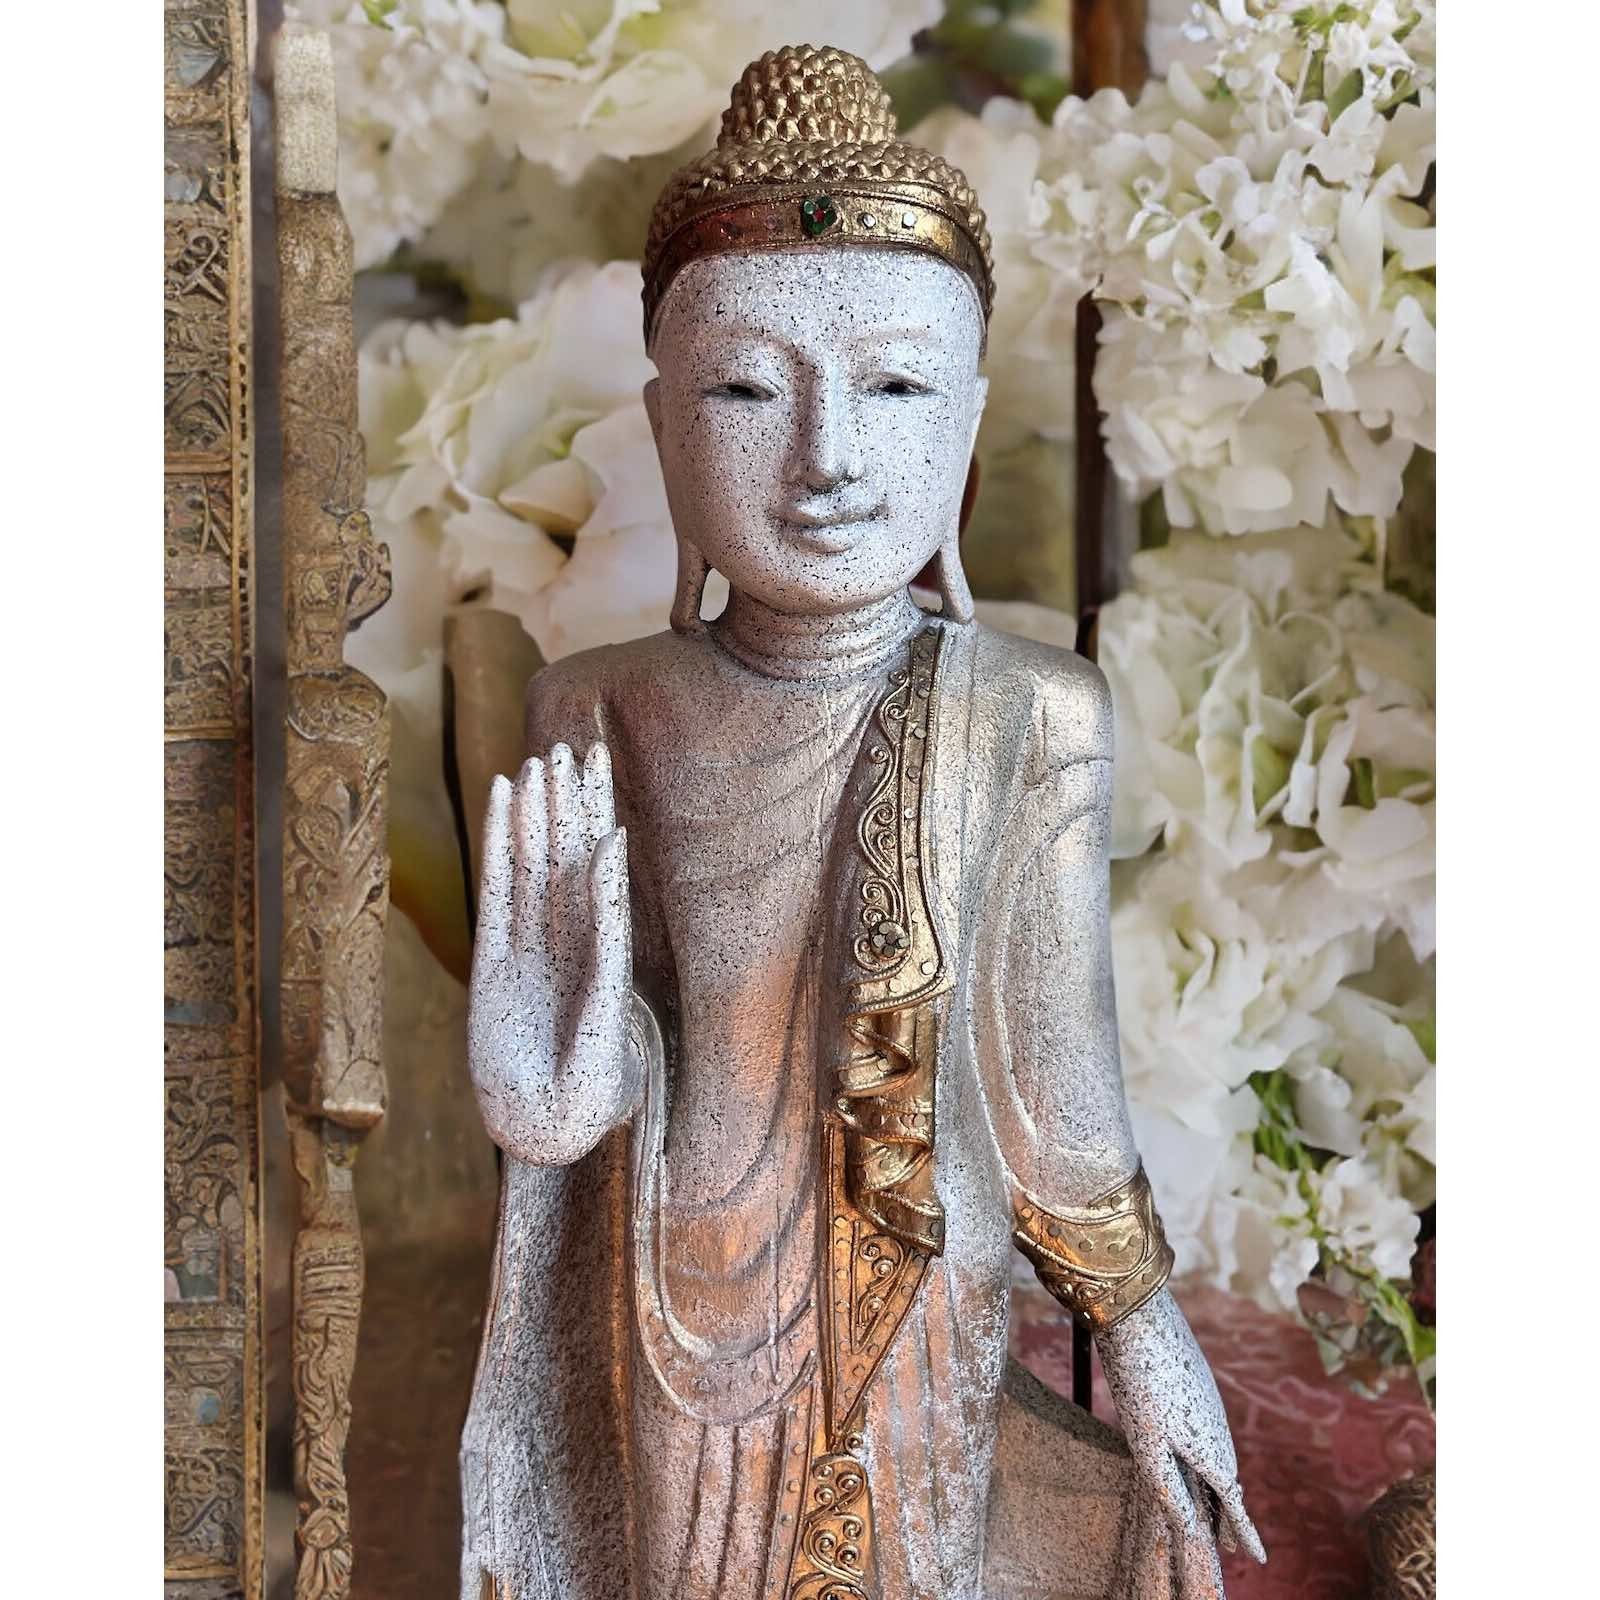 Montags Buddhafigur 108cm Buddha Asien groß Thailand Figur Holz LifeStyle